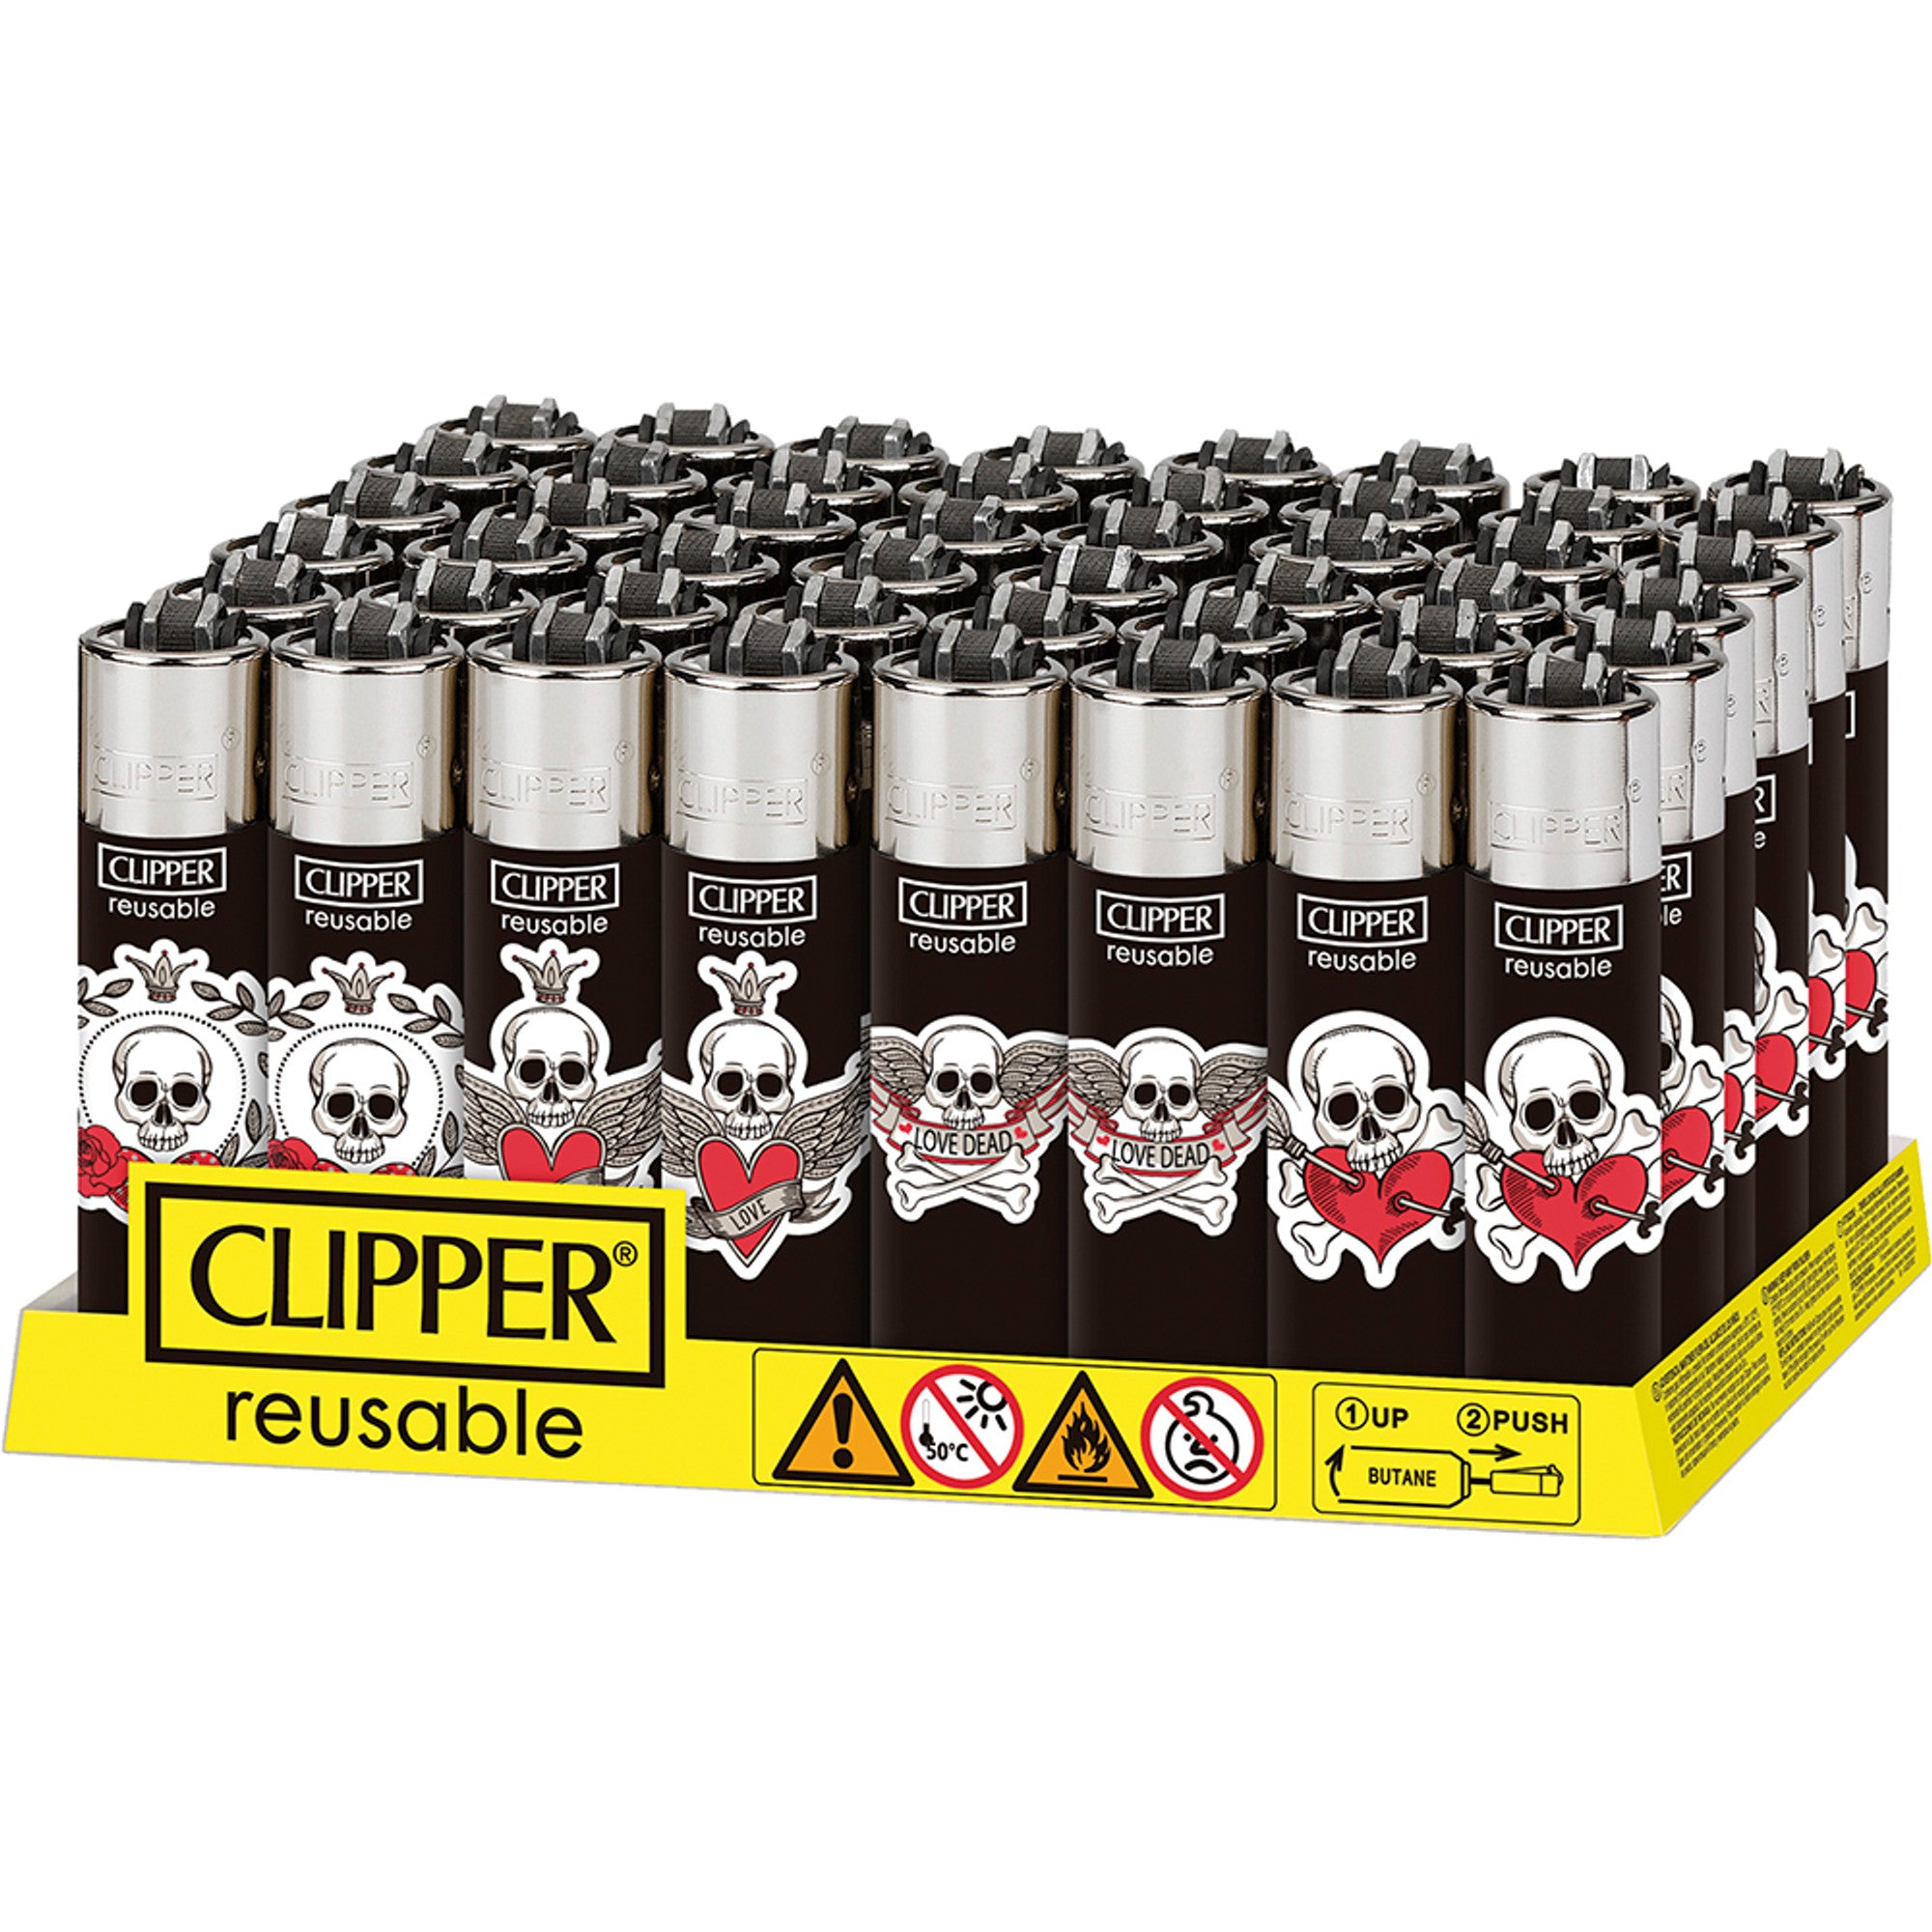 Clipper - Love Dead Lighters